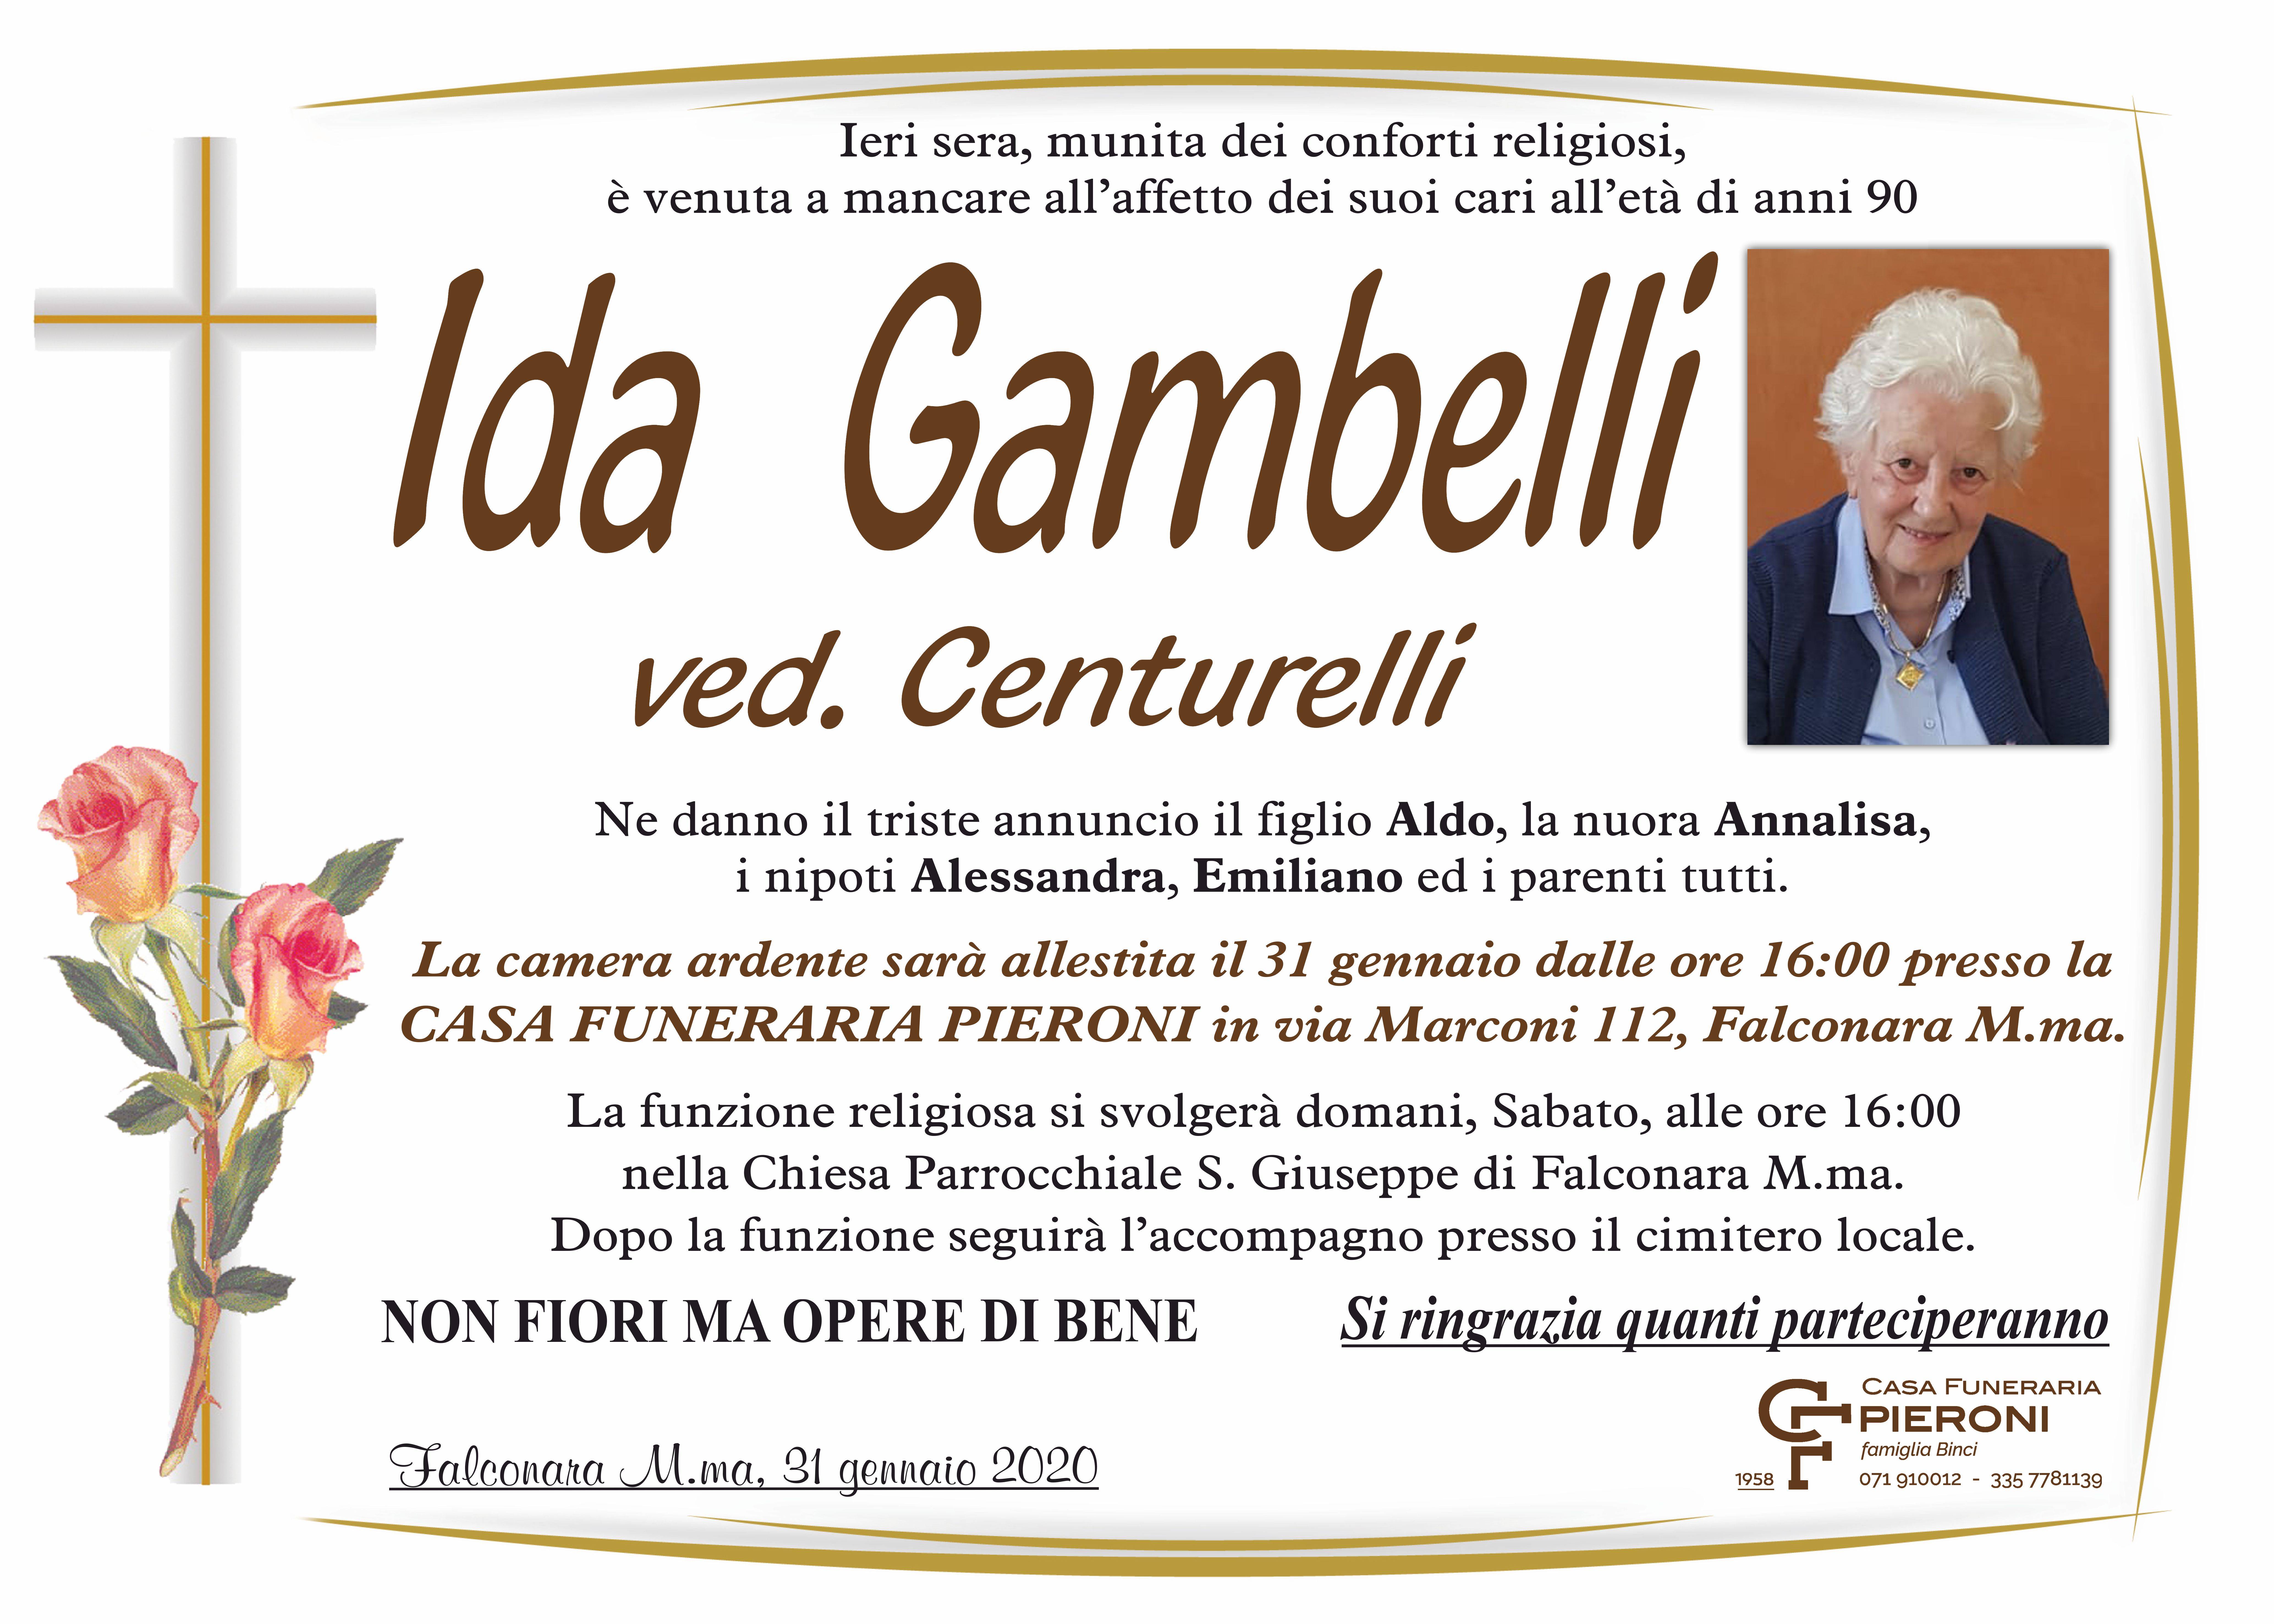 Ida Gambelli